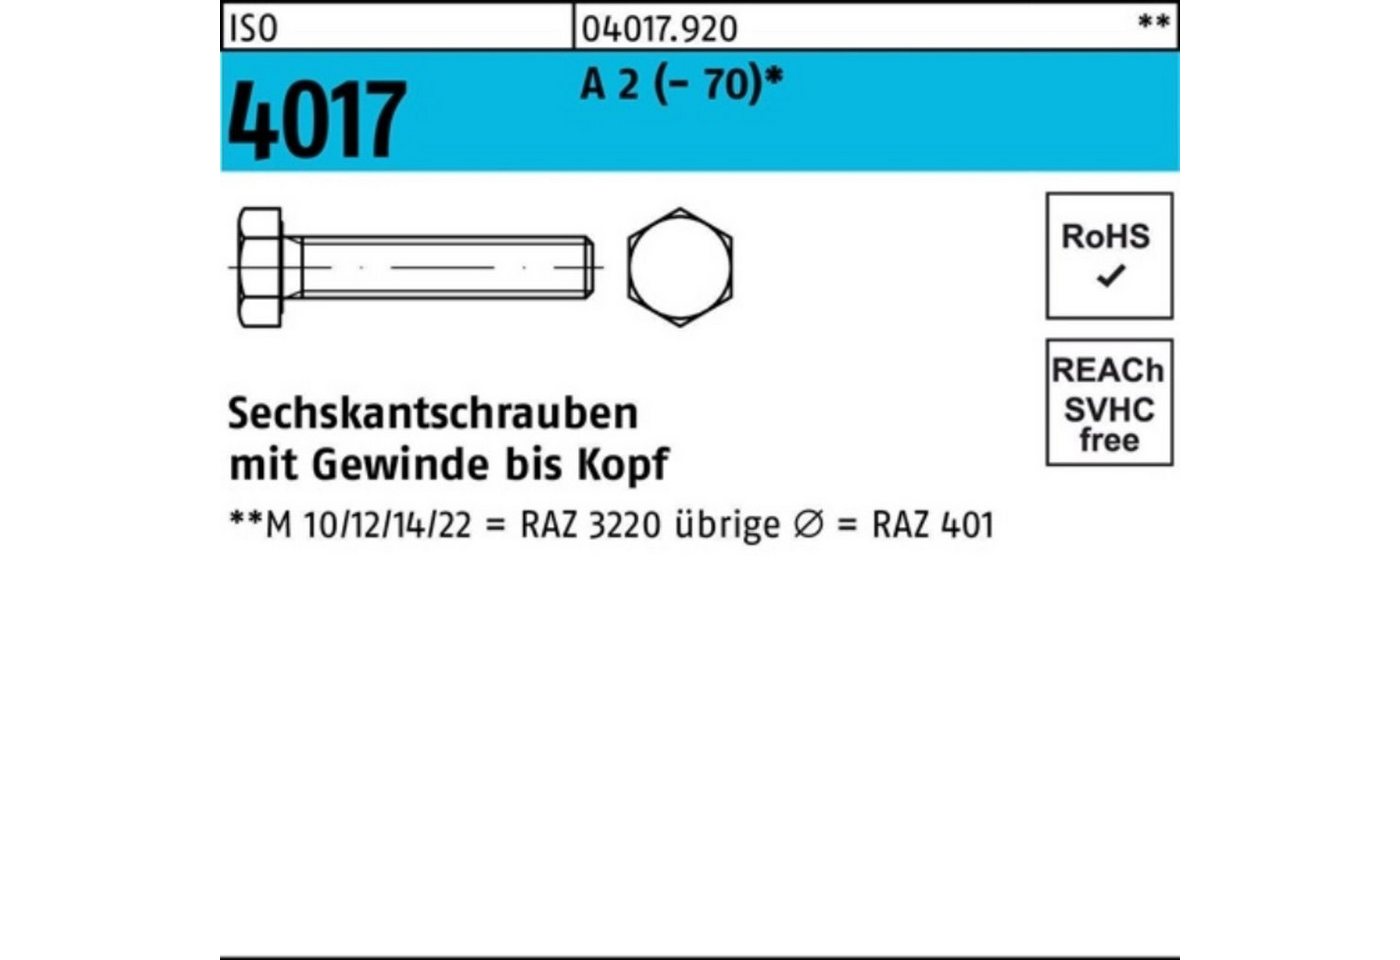 Bufab Sechskantschraube 100er Pack Sechskantschraube ISO 4017 VG M20x 110 A 2 (70) 10 Stück von Bufab